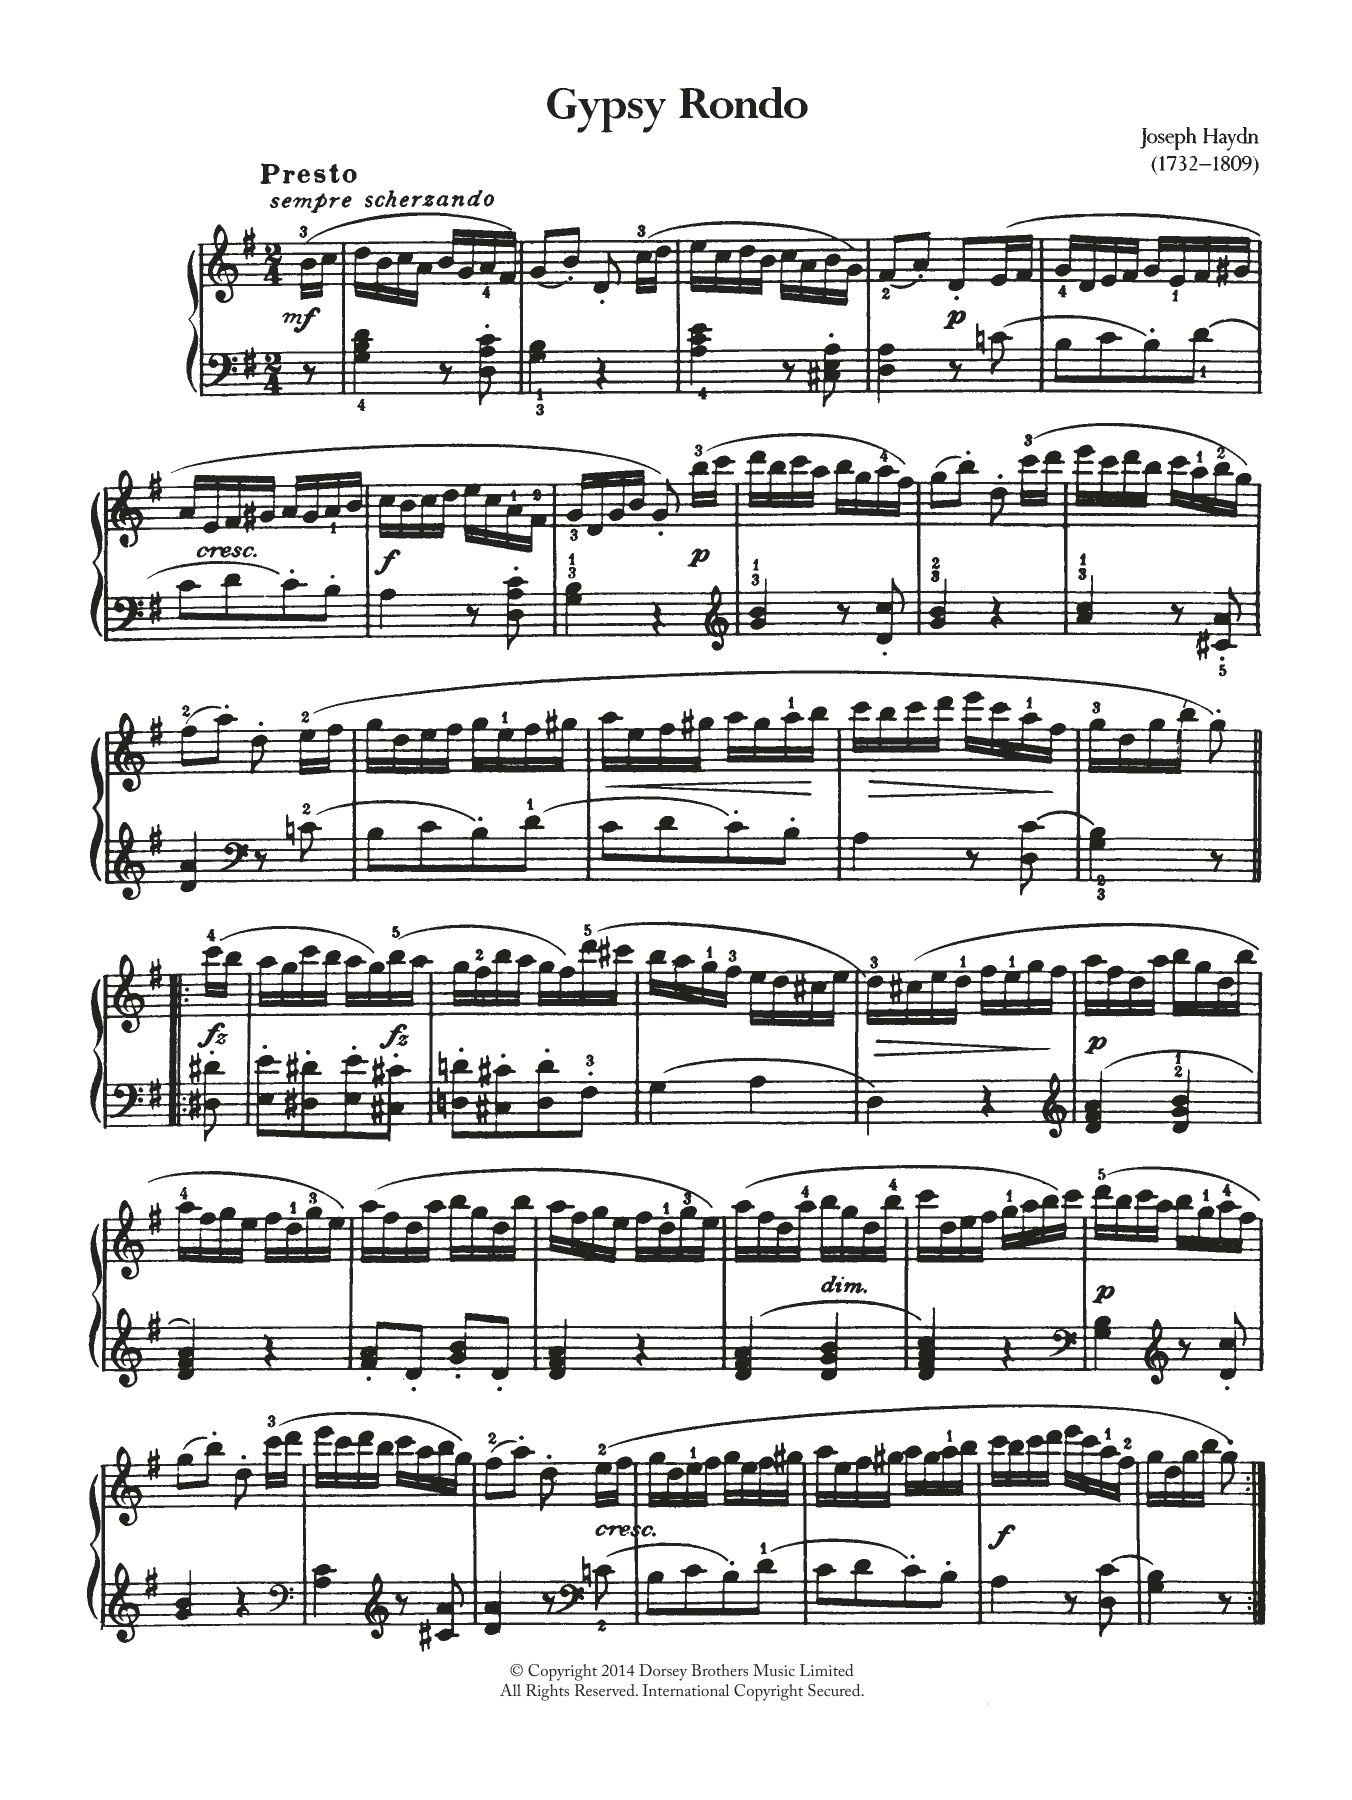 Franz Joseph Haydn Gypsy Rondo Sheet Music Notes & Chords for Easy Guitar Tab - Download or Print PDF